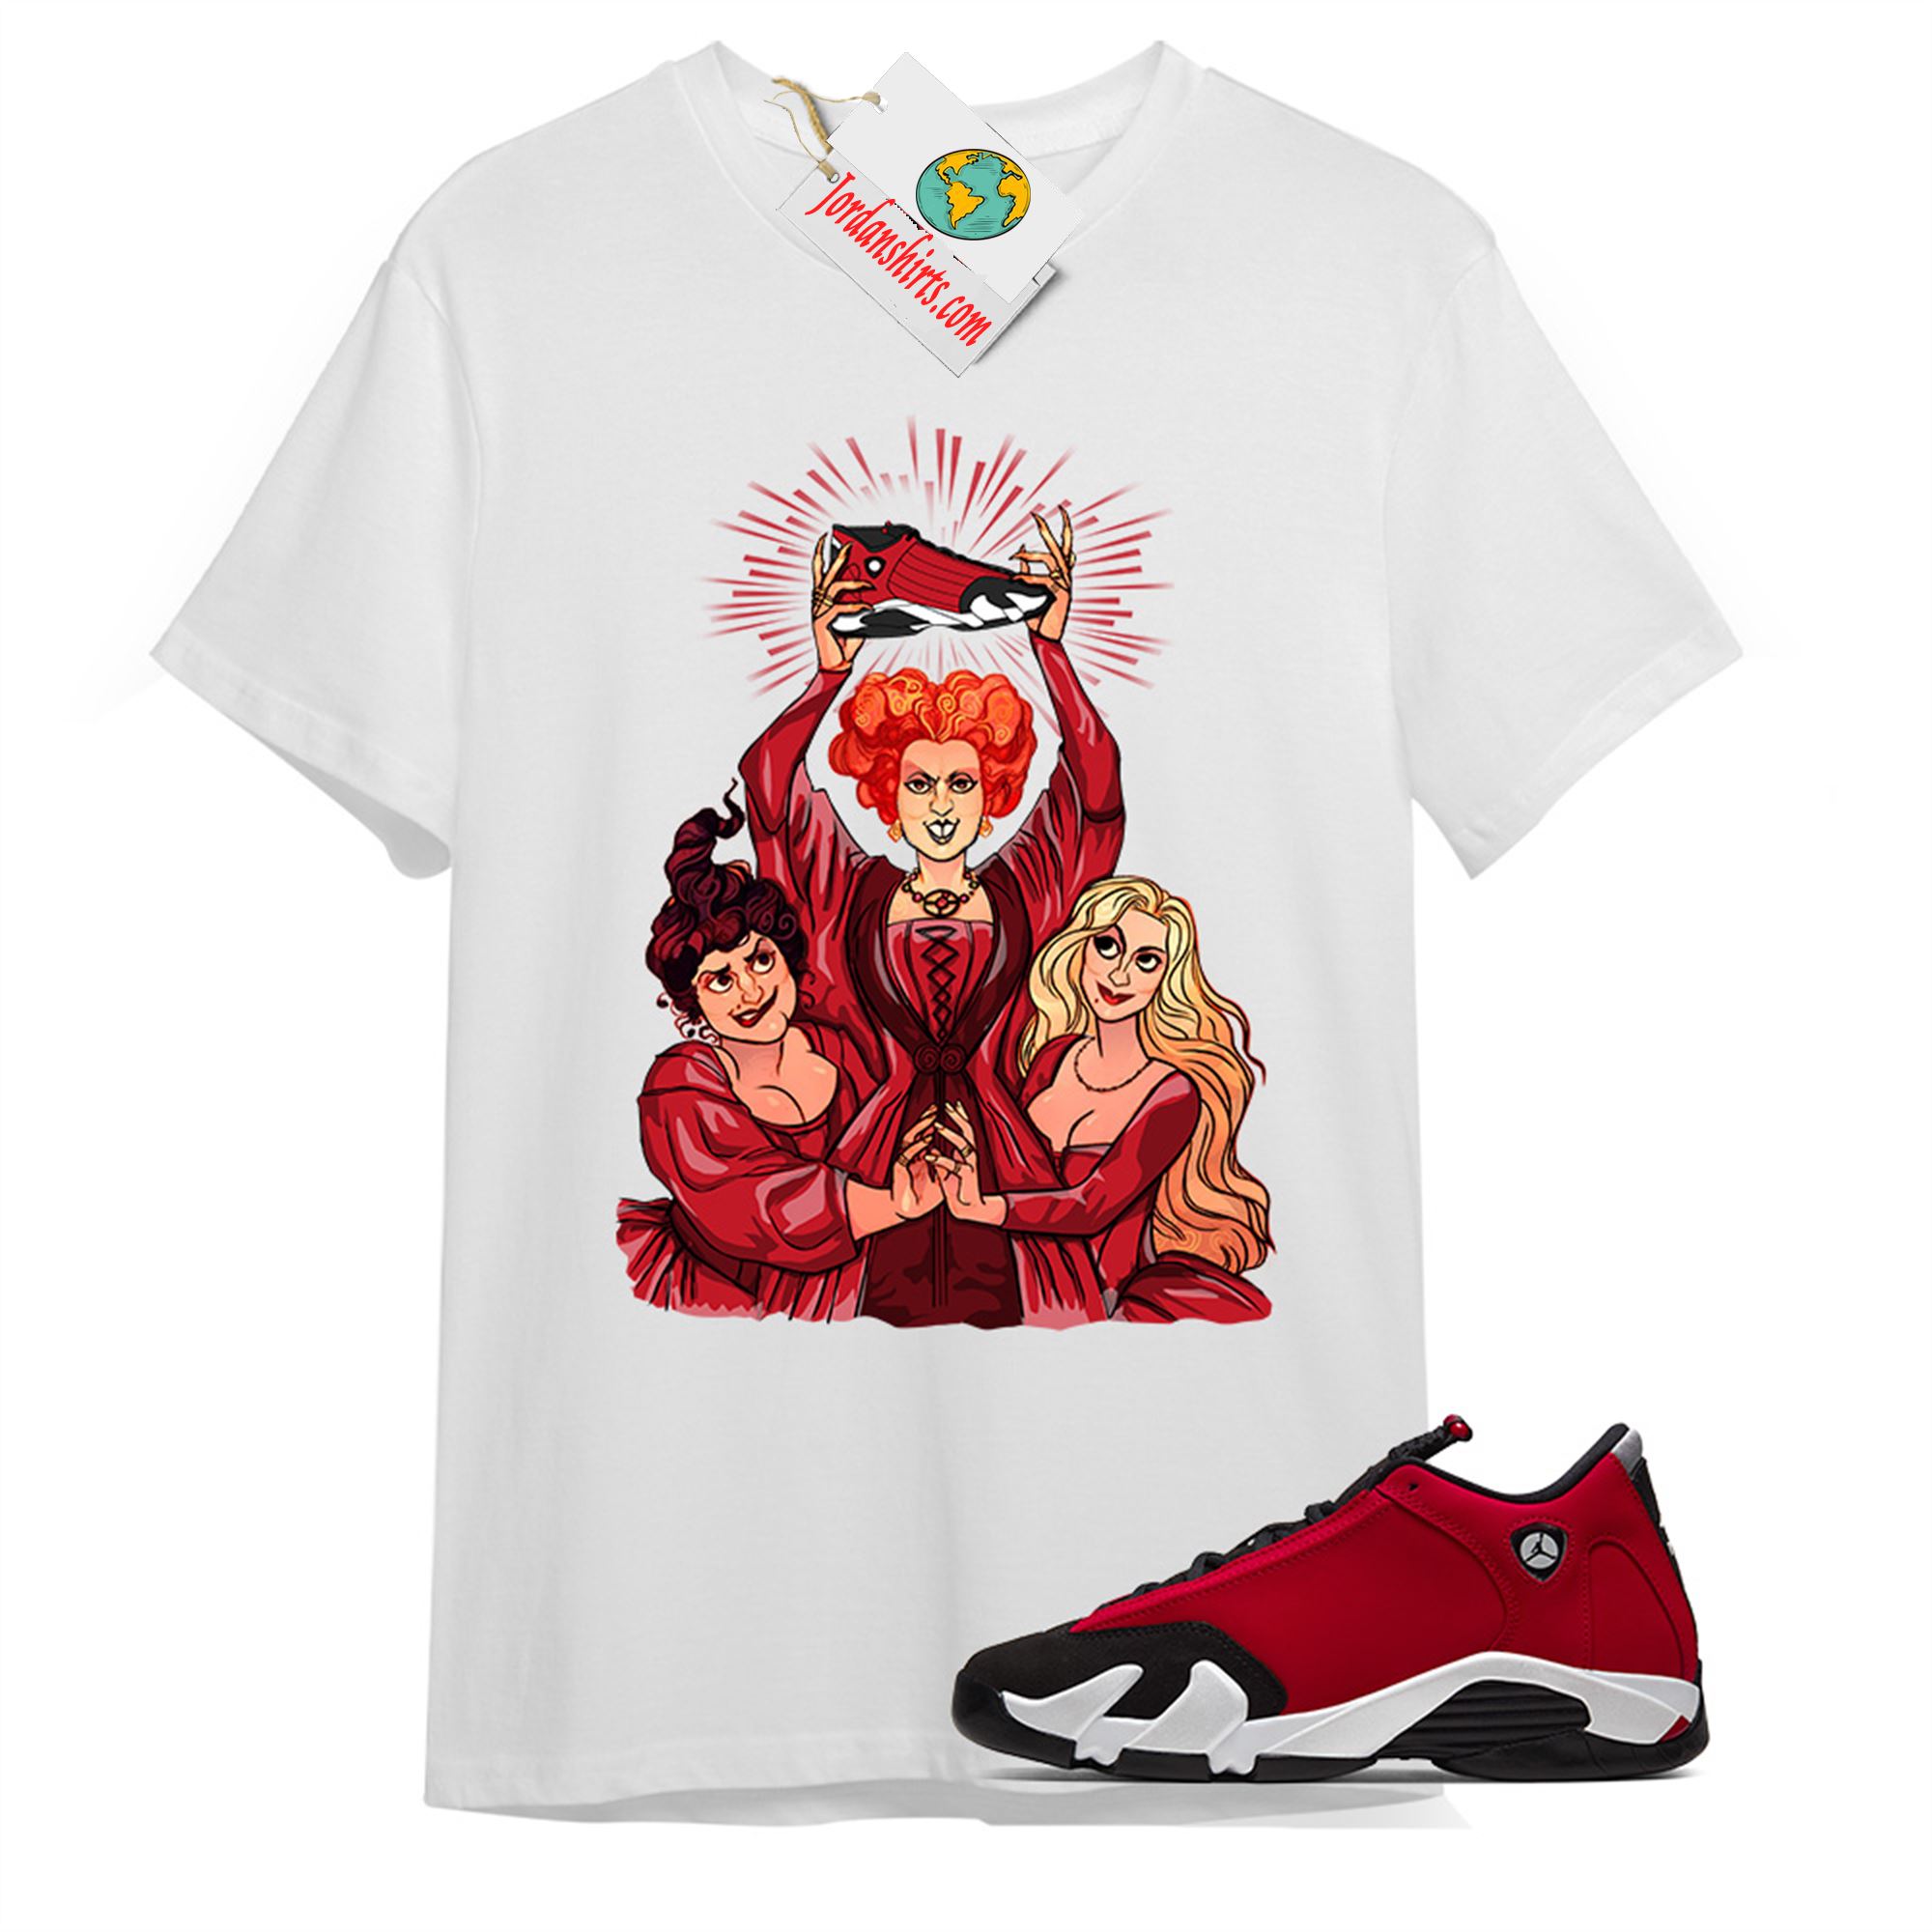 Jordan 14 Shirt, Hocus Pocus Three Witches White T-shirt Air Jordan 14 Gym Red 14s Full Size Up To 5xl